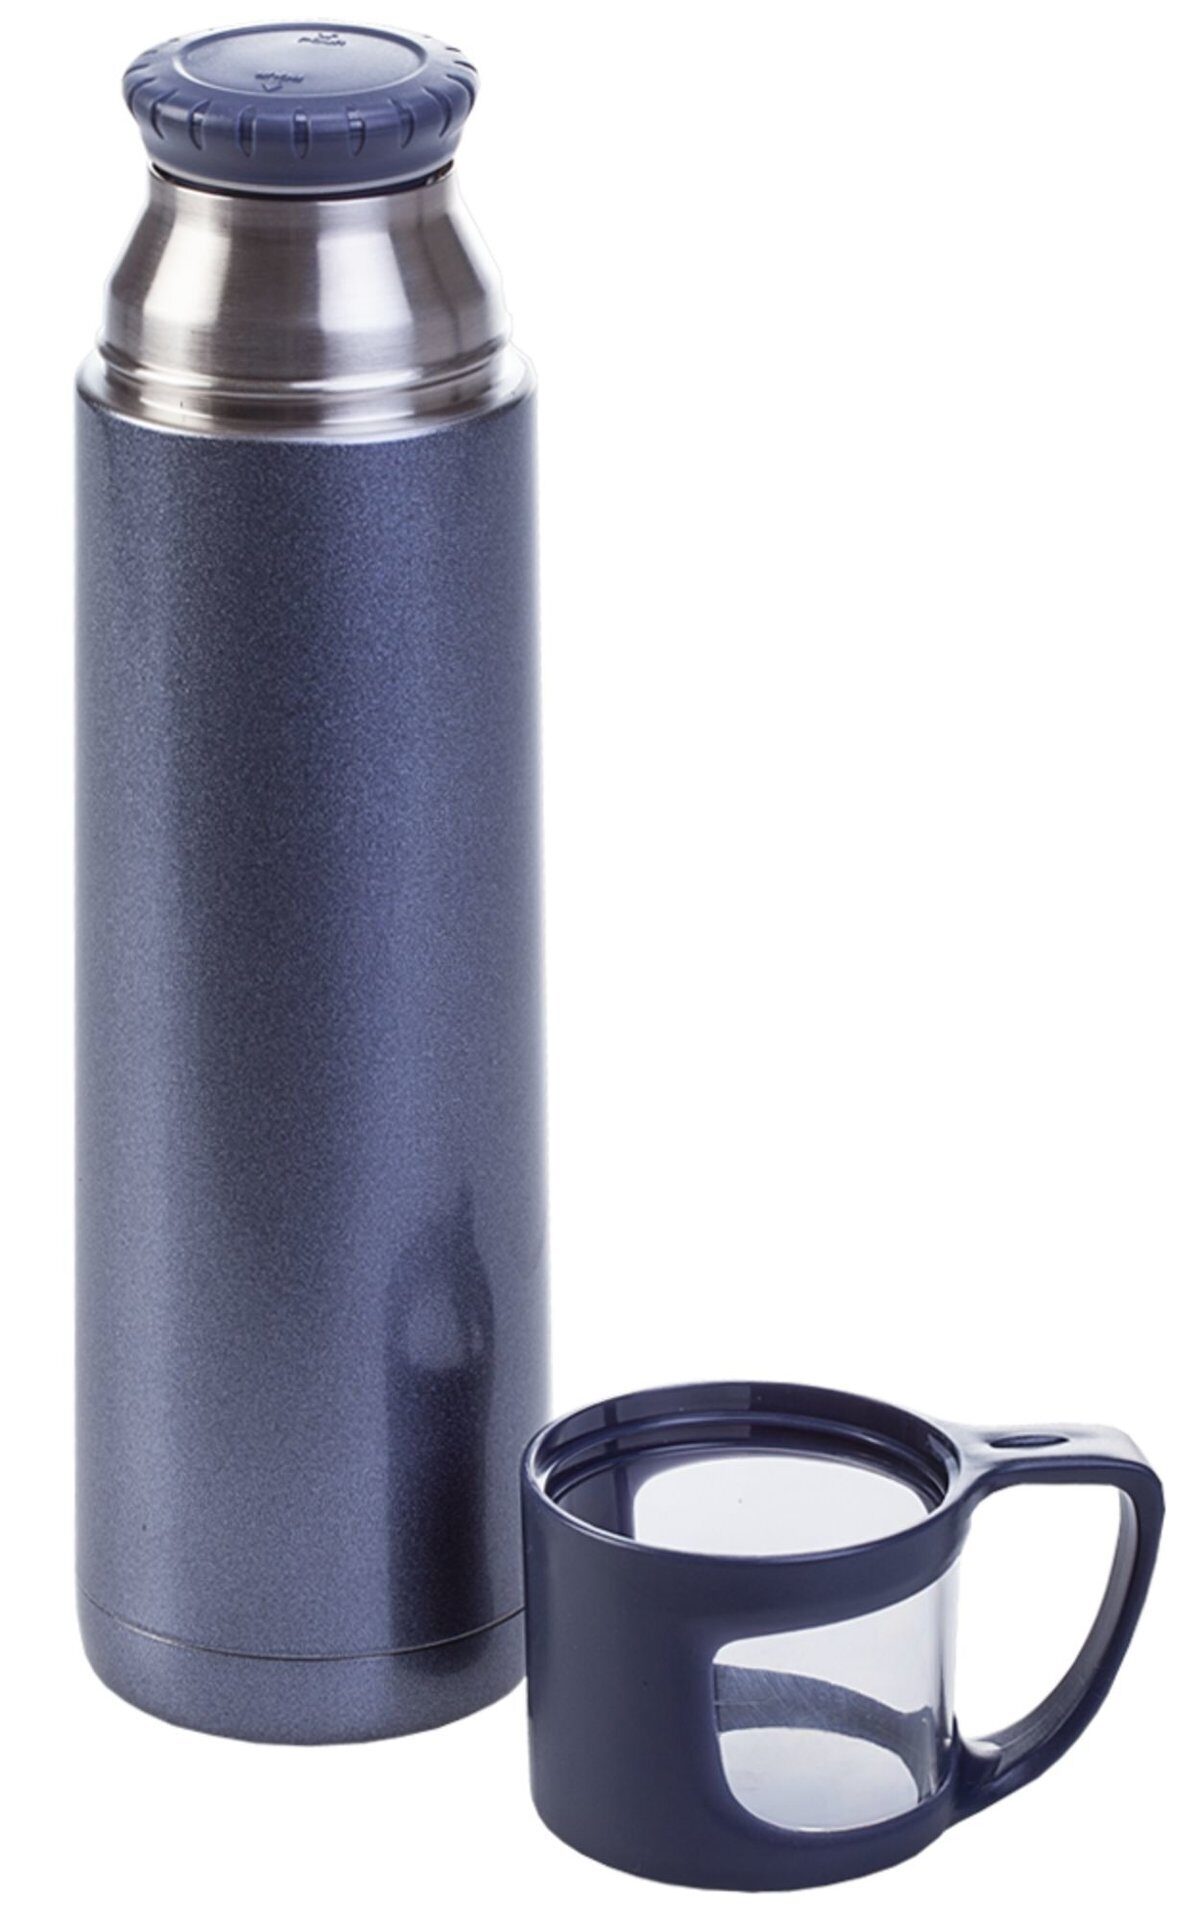 Термос для чая и кофе. Термос Coffee Break, синий. Blue Flask термос. Термос маленький. Маленький легкий термос.